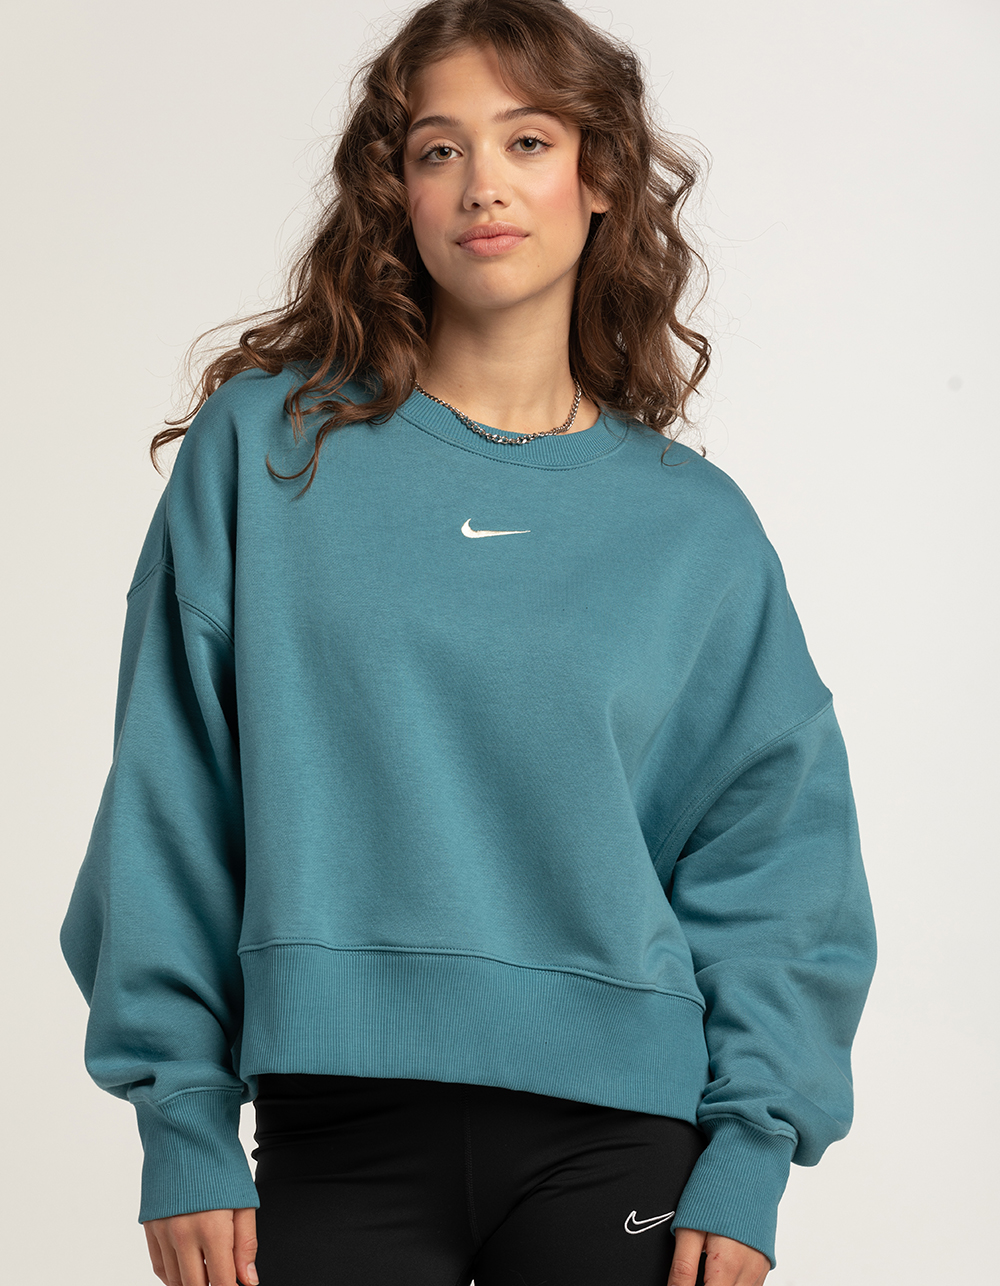 Oversized Sweatshirt for Women Neck Sweatshirt Long Sleeve deal